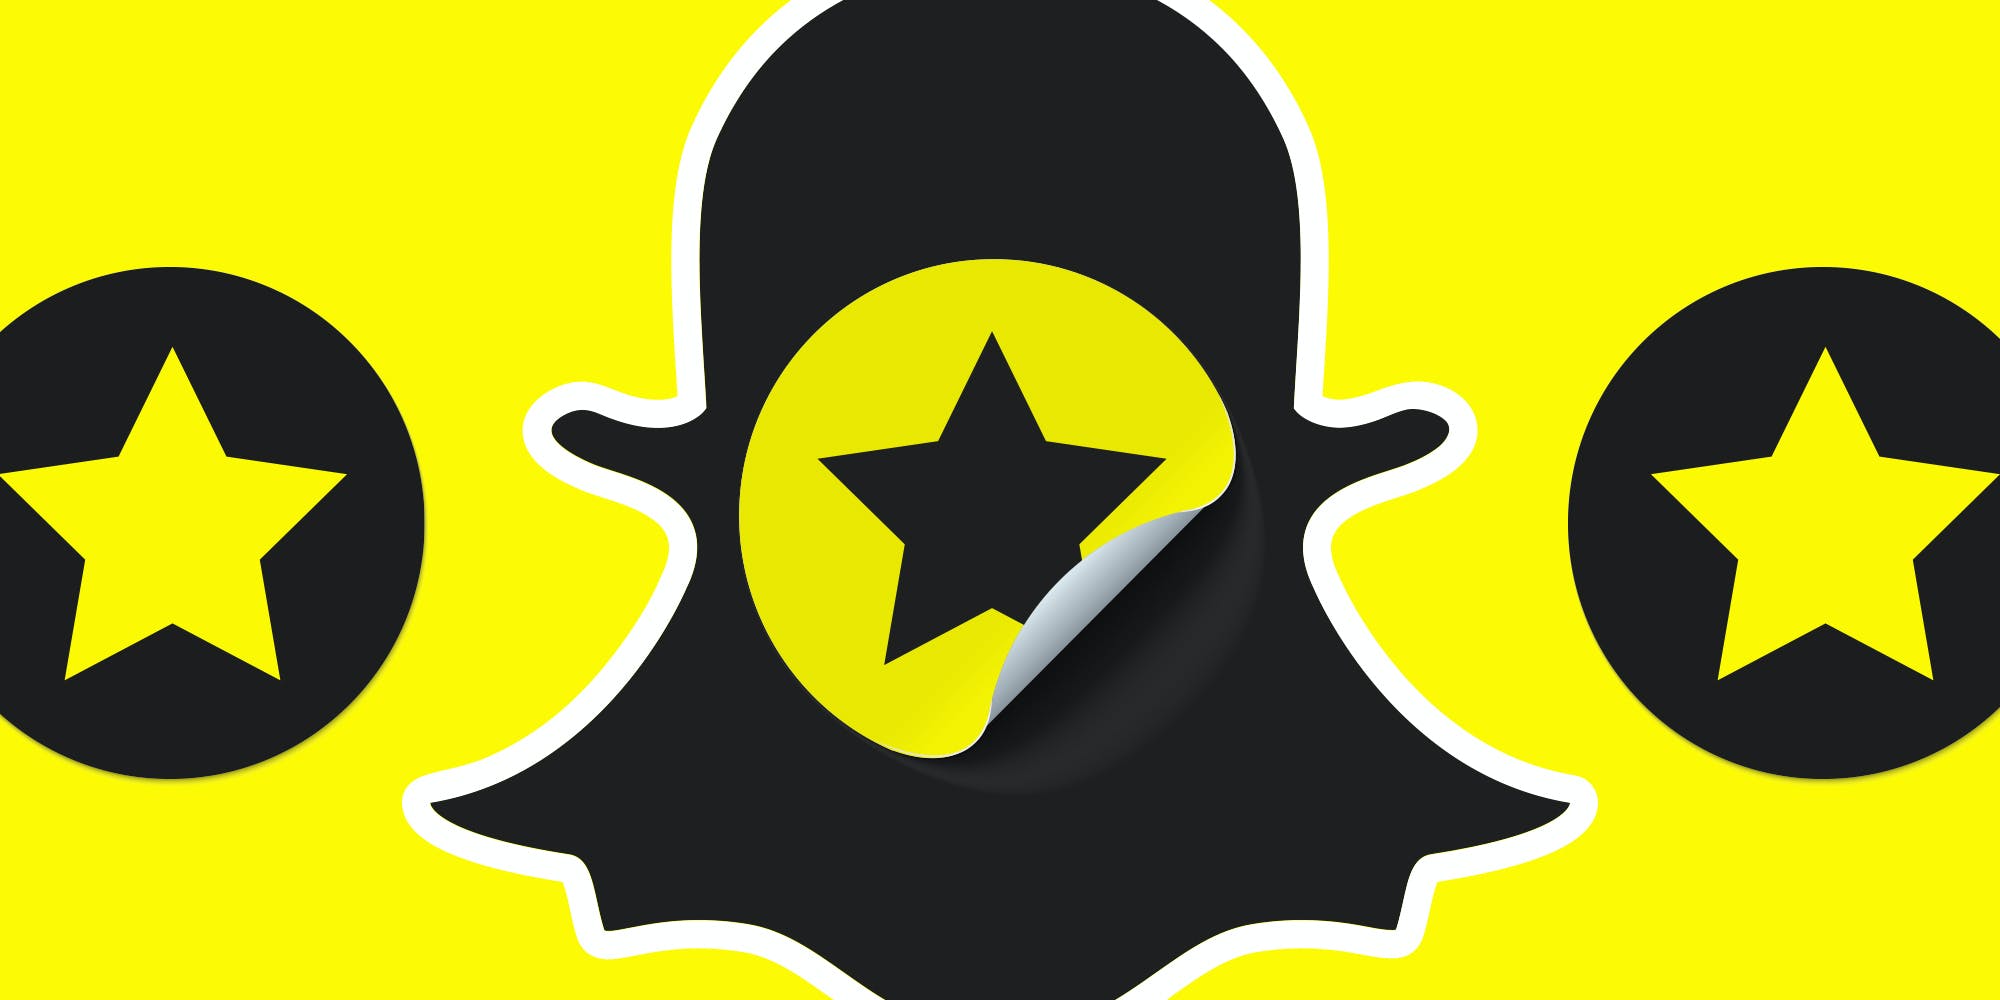 Snapchat Logo Stock Photos and Images - 123RF